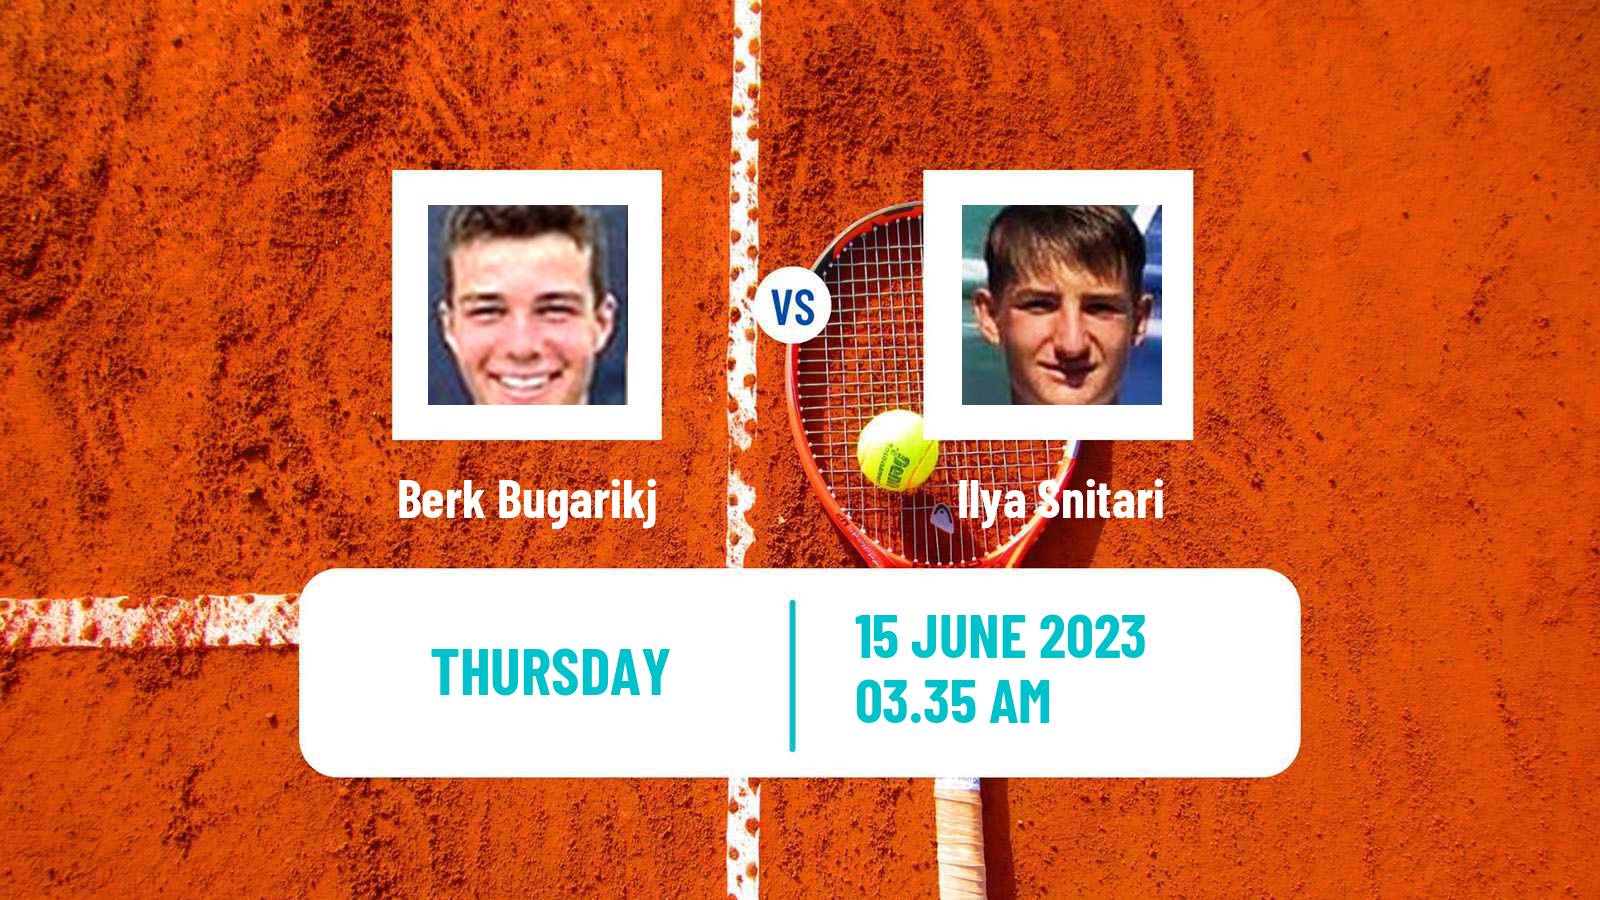 Tennis Davis Cup Group III Berk Bugarikj - Ilya Snitari